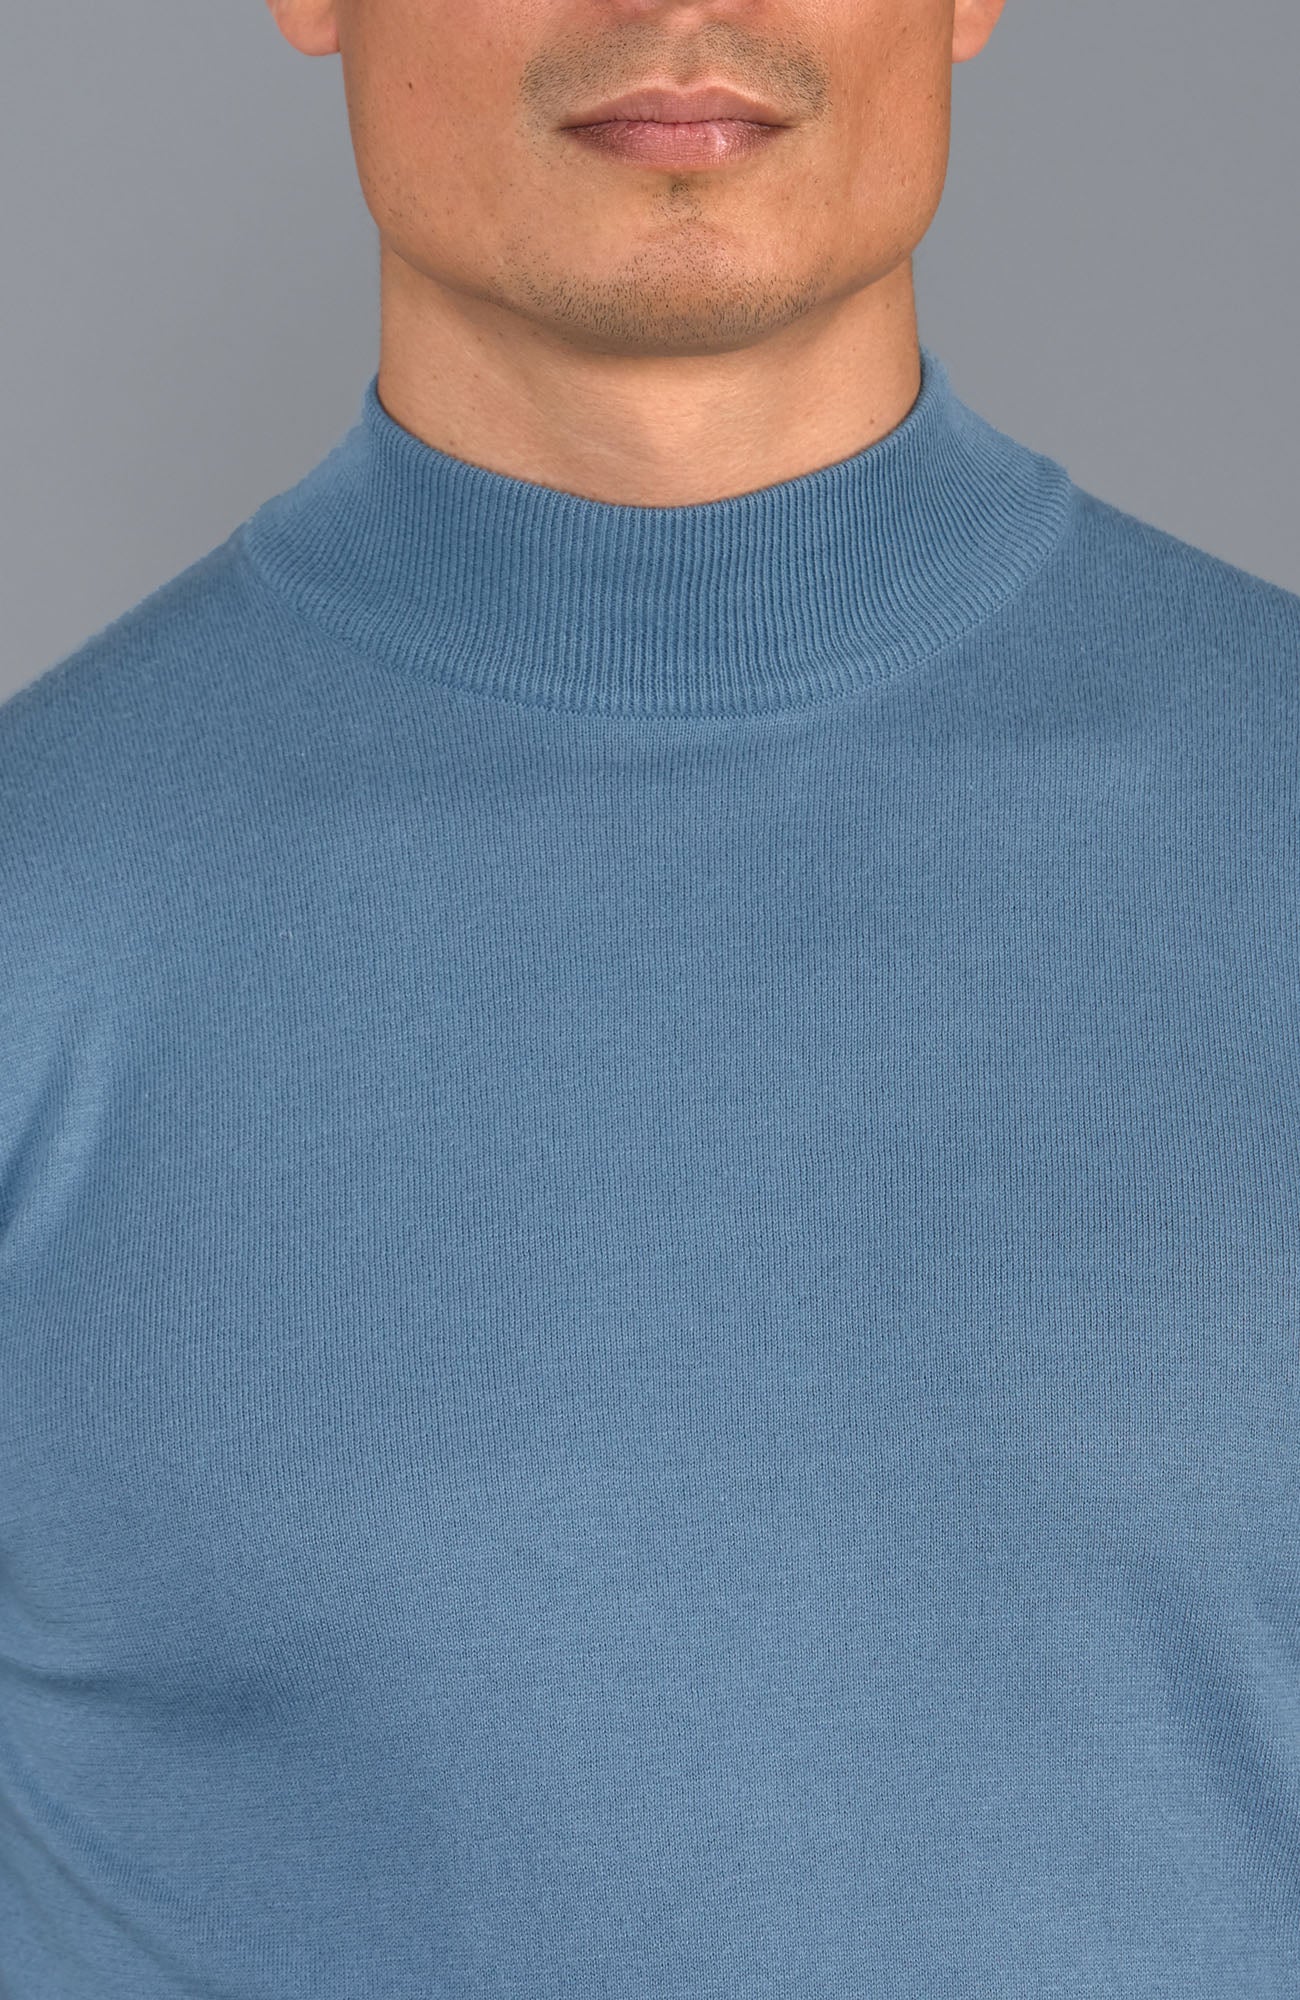 blue mens mock turtle neck sweater